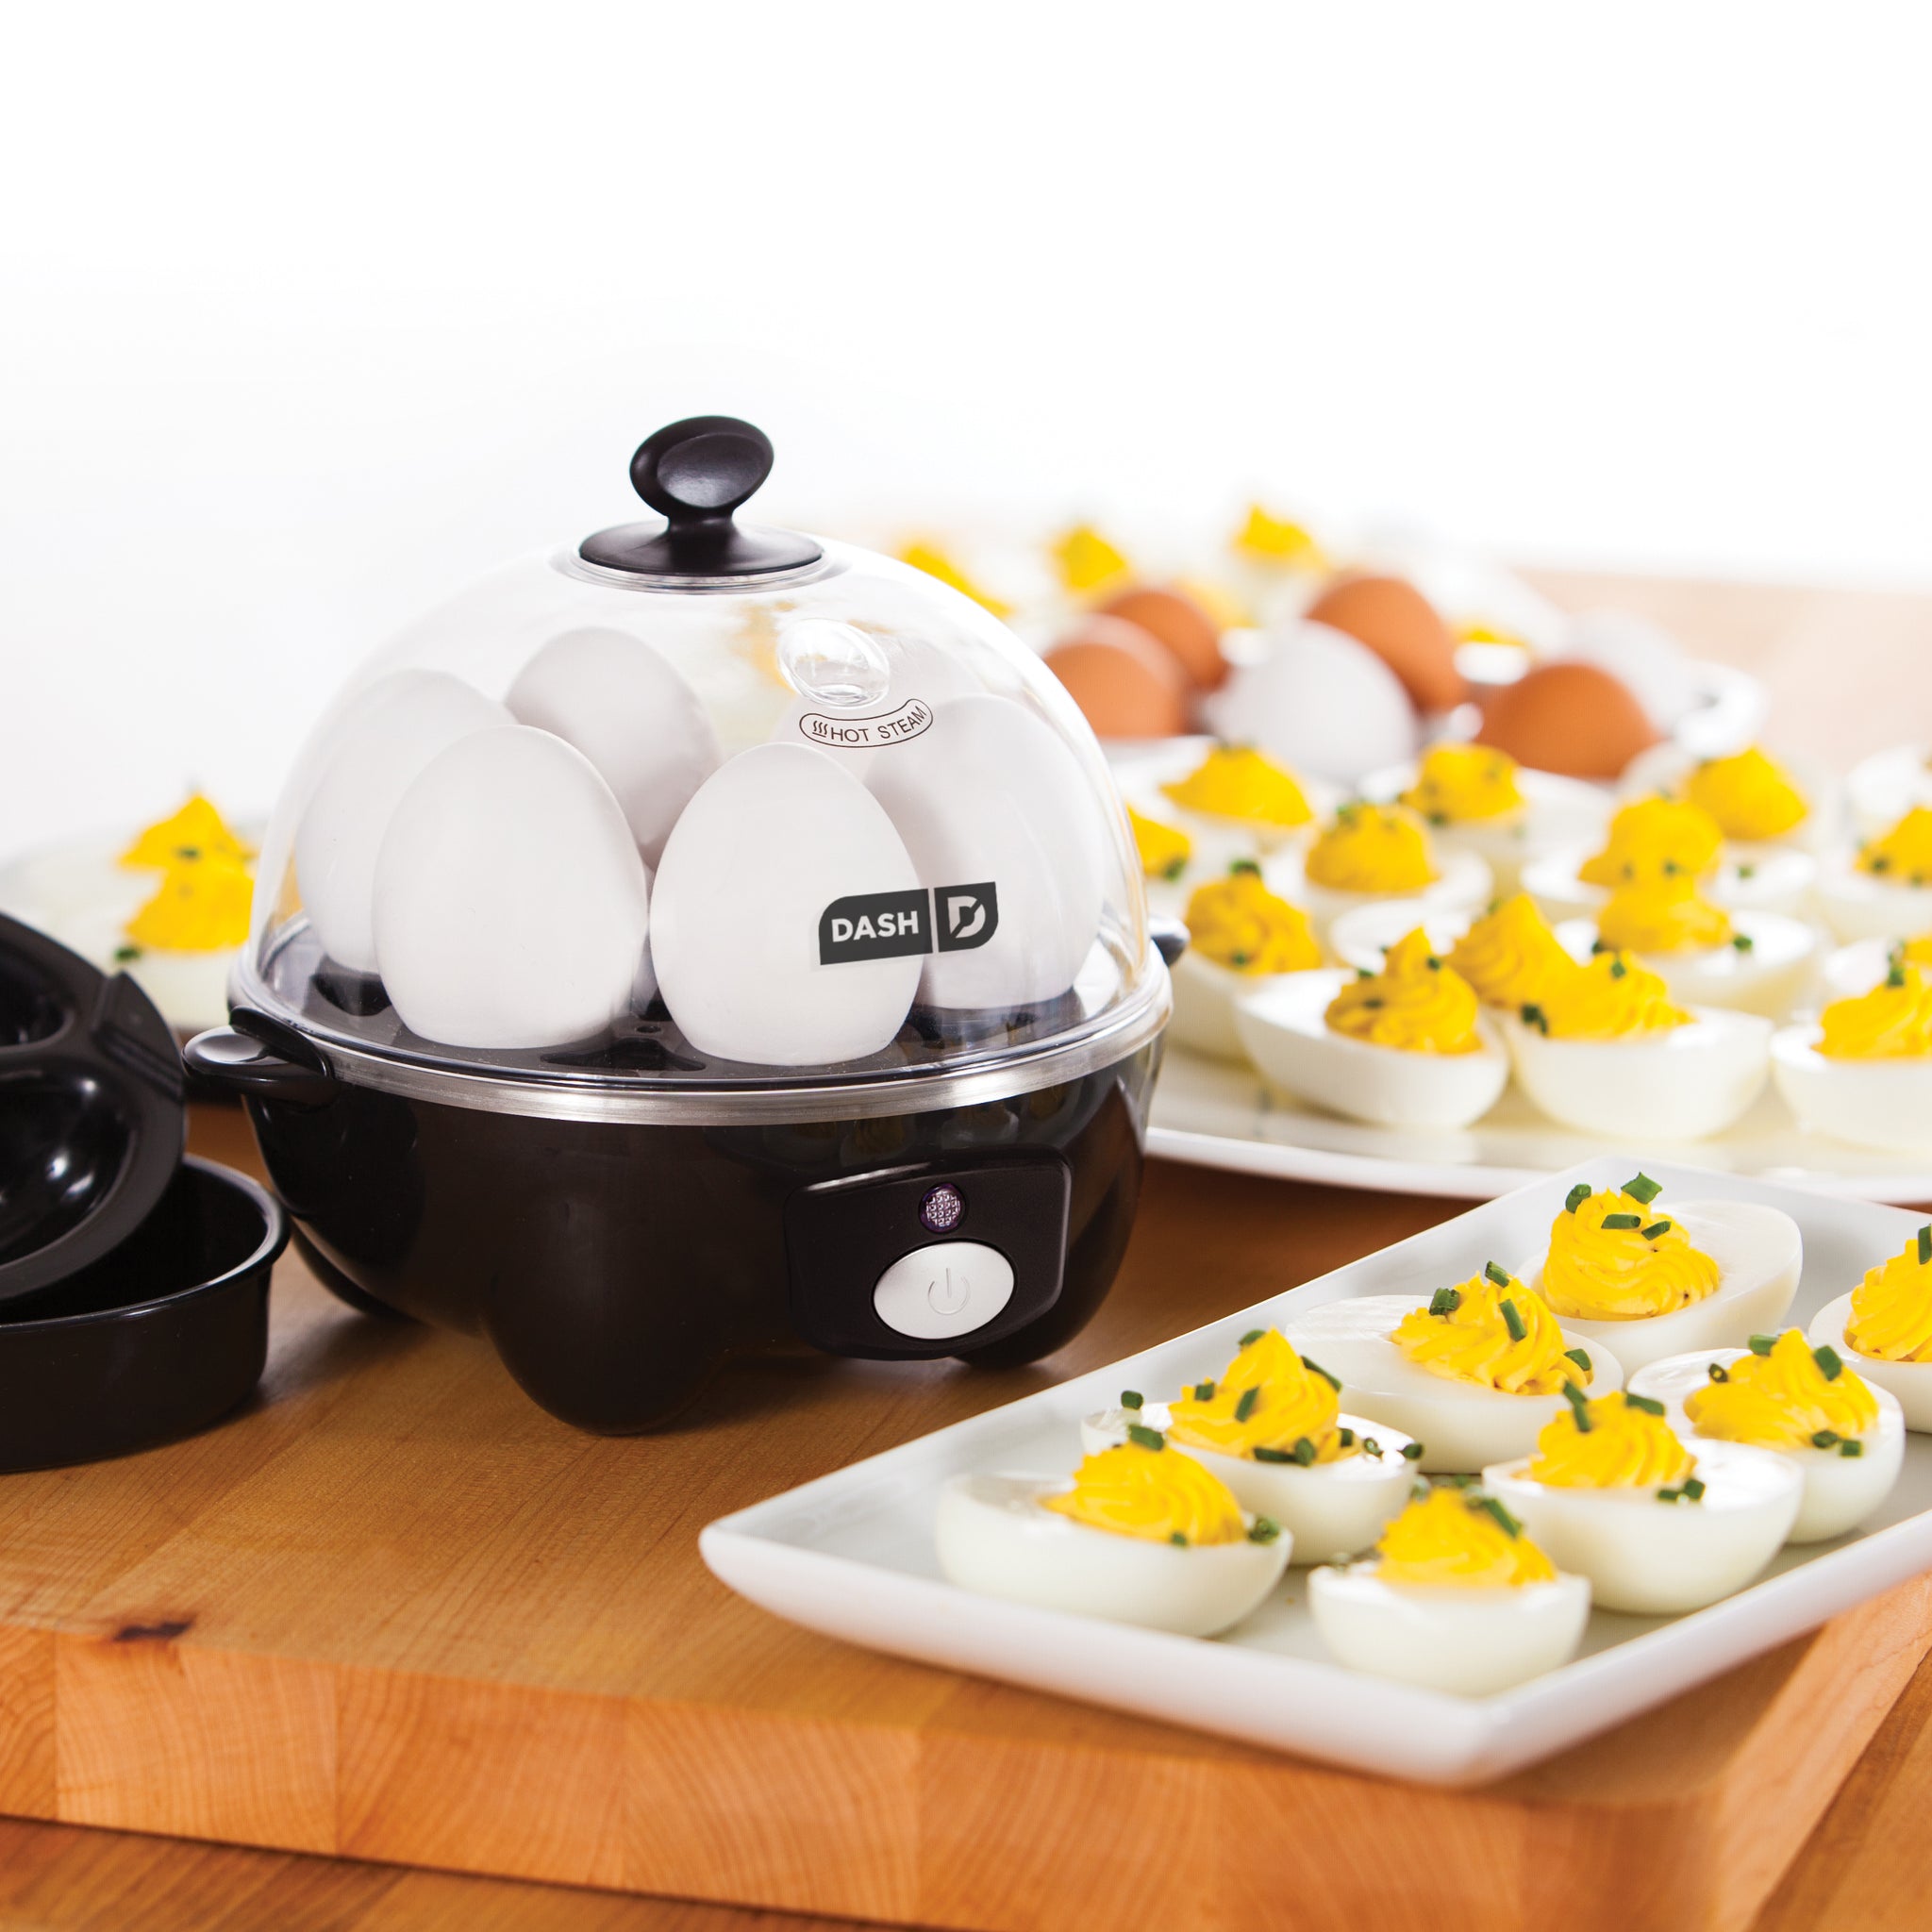 Nutricook Rapid Egg Cooker: 7 Egg Capacity Electric Egg Cooker for